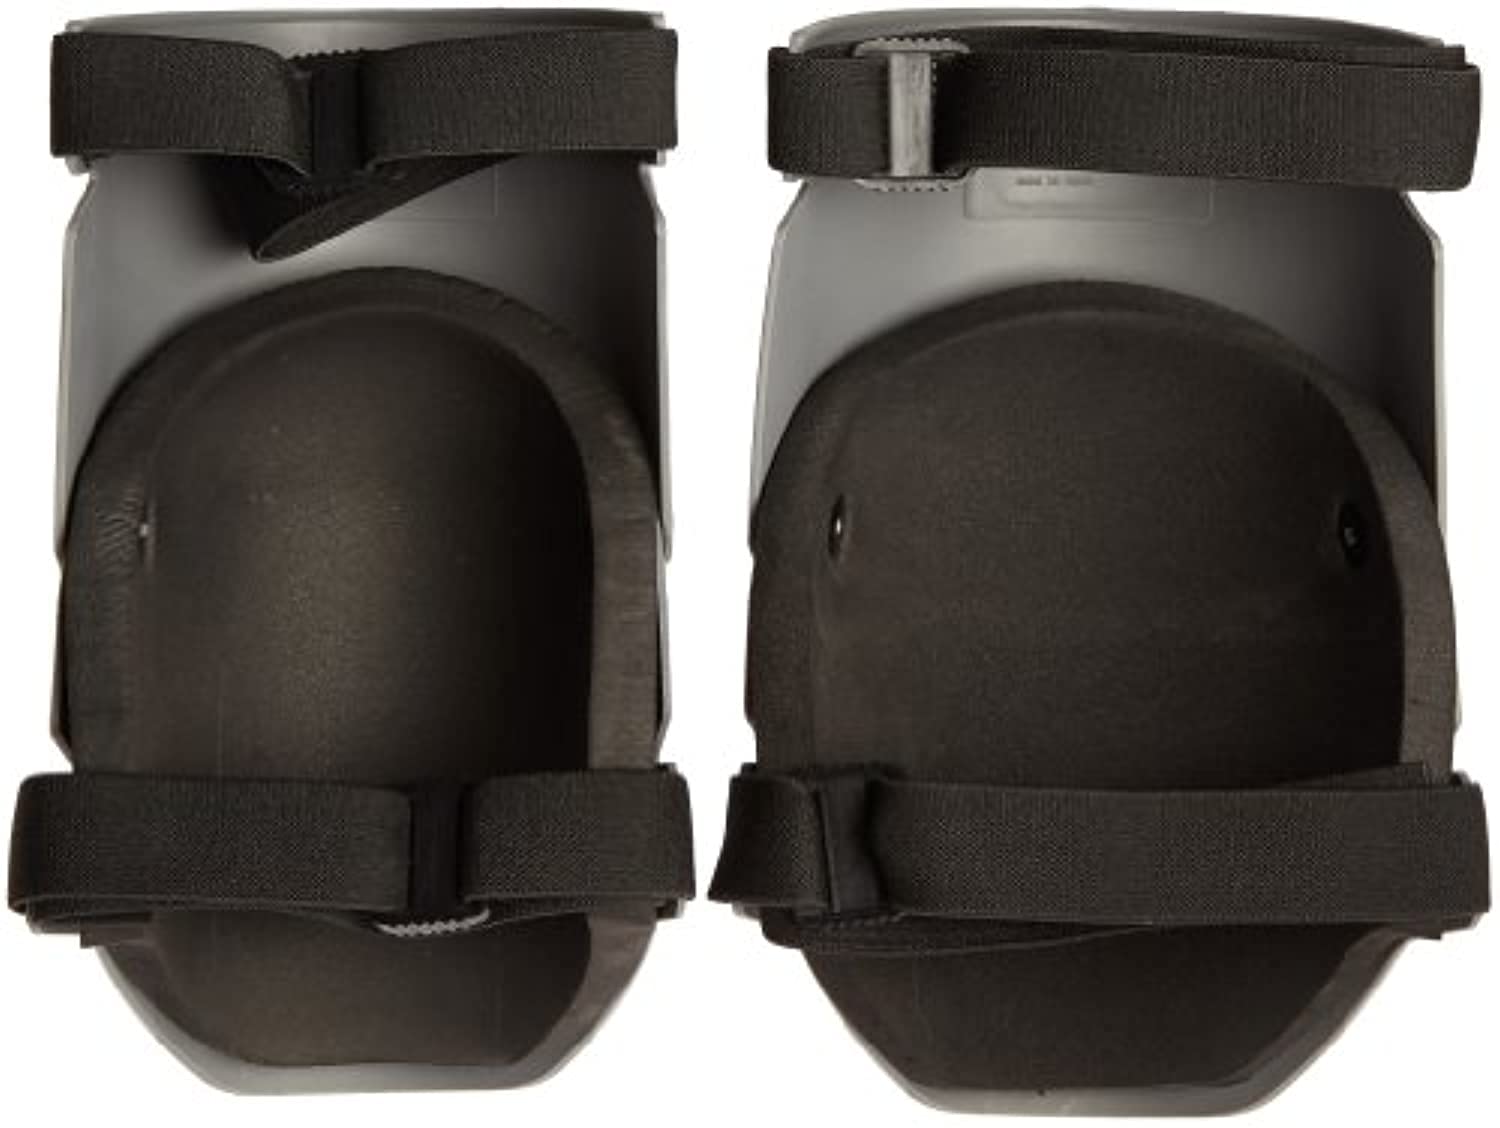 Sellstrom Ultra Flex III KneePro Knee Pads for Construction, Gardening, Flooring - Pro Protection & Comfort for Men & Women (Multiple Colors)